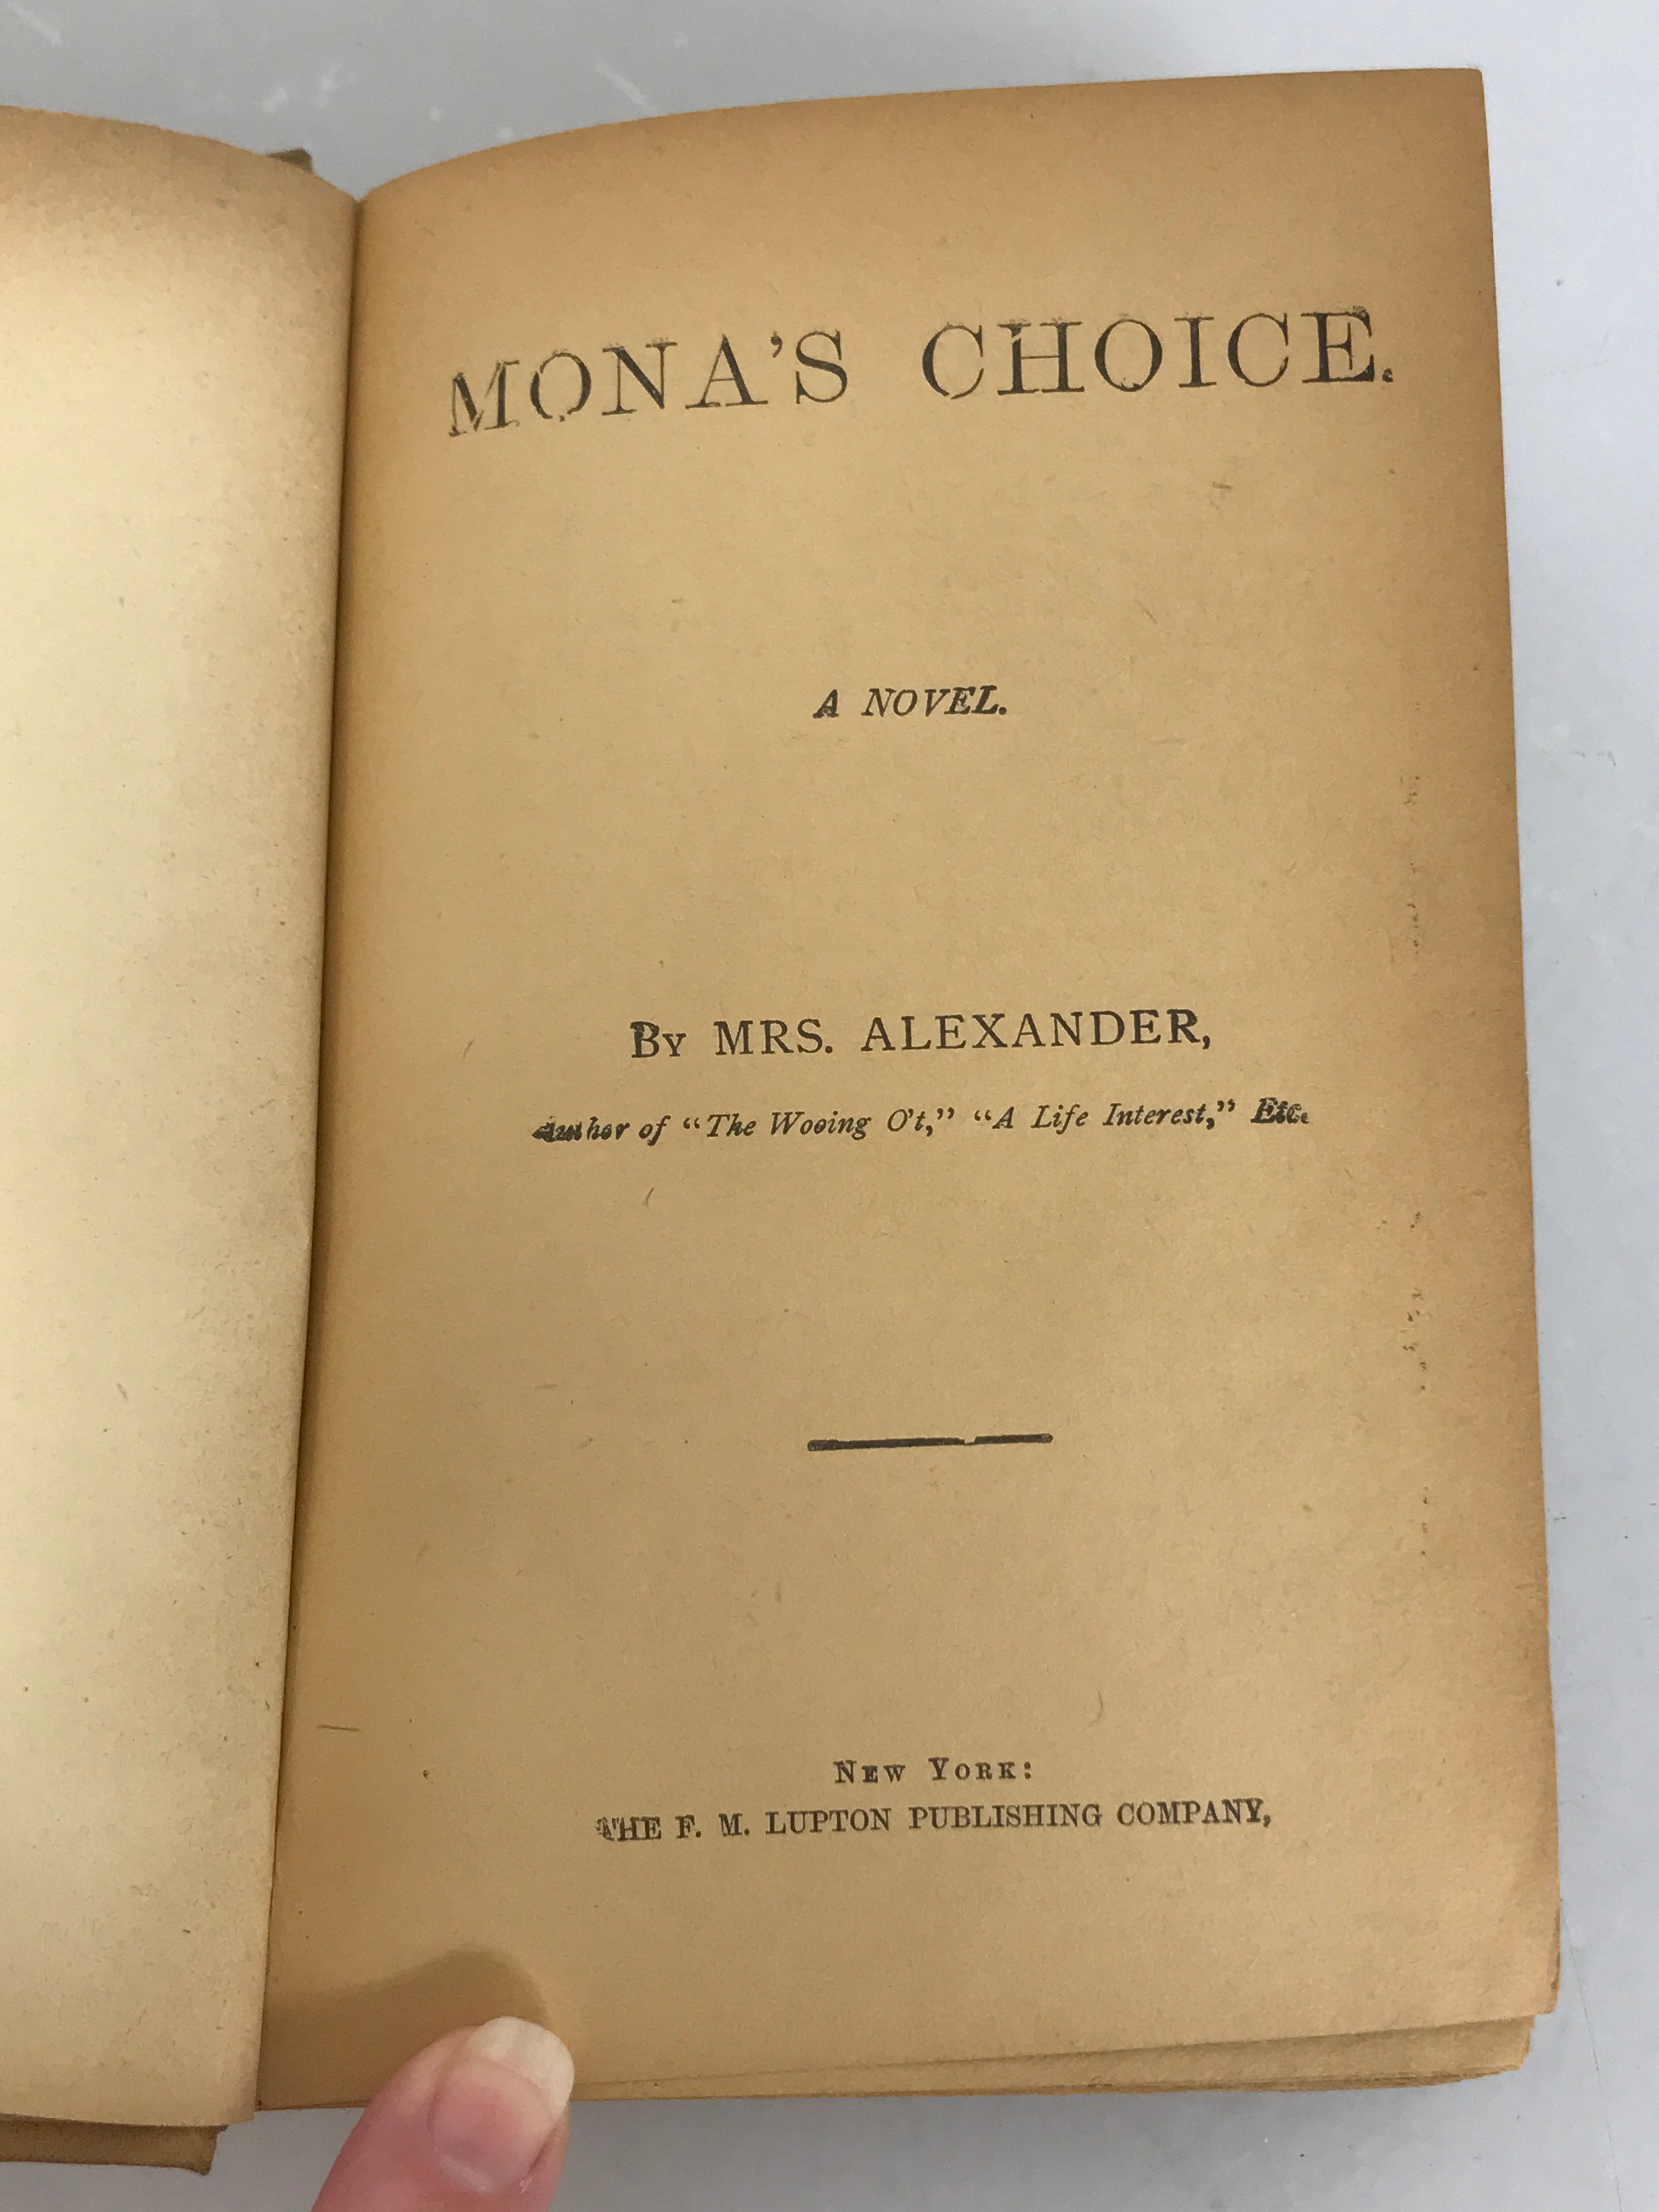 Lot of 3 Antique Romance Novels: Life's Shop Window, Mona's Choice, Strange Fruit HC